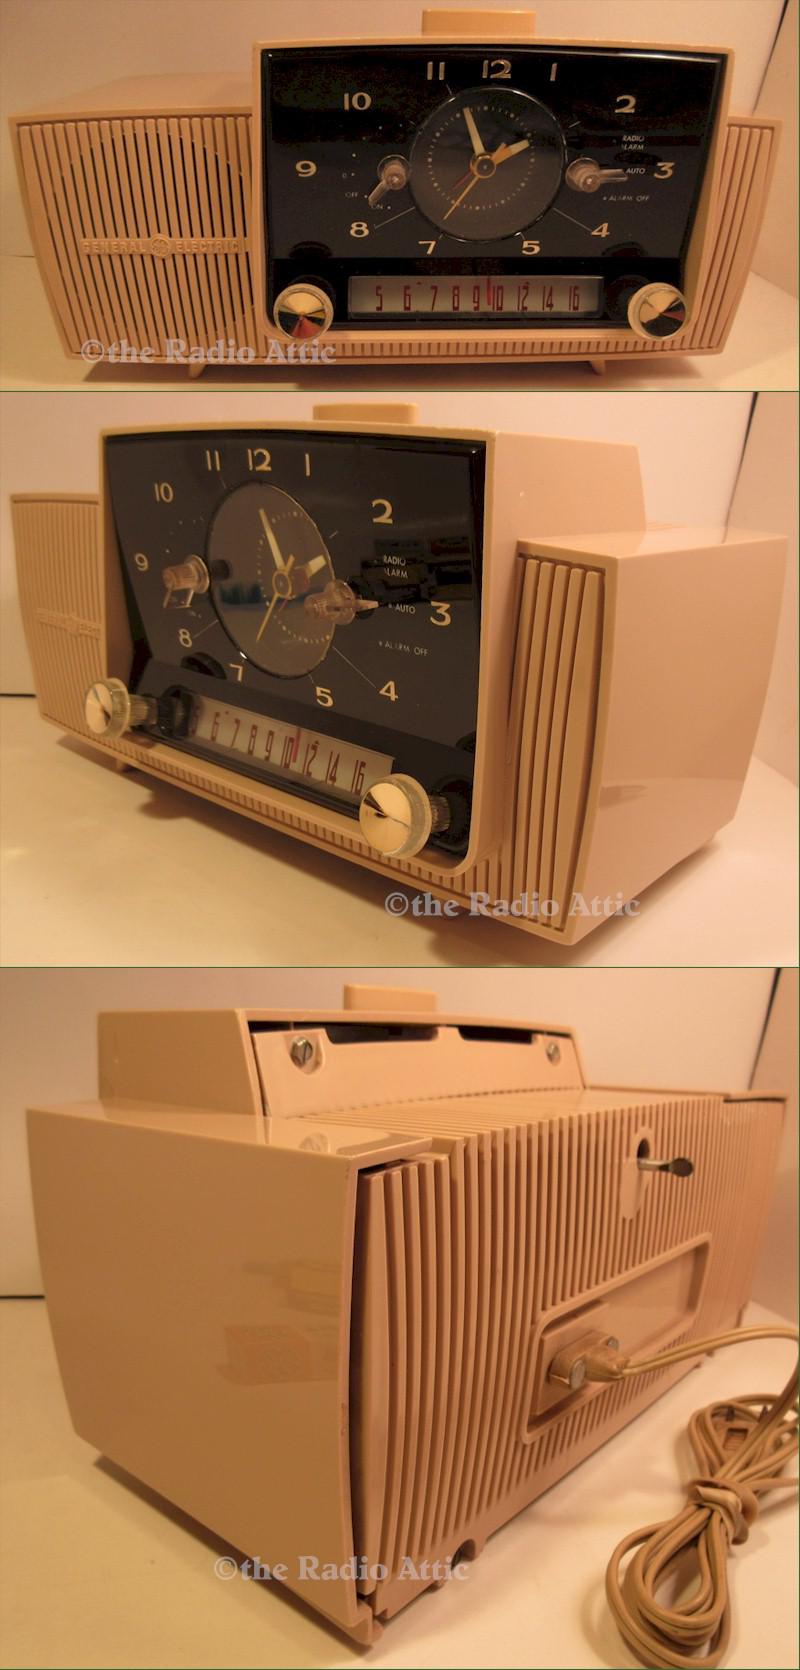 General Electric C-434 Clock Radio (1960)